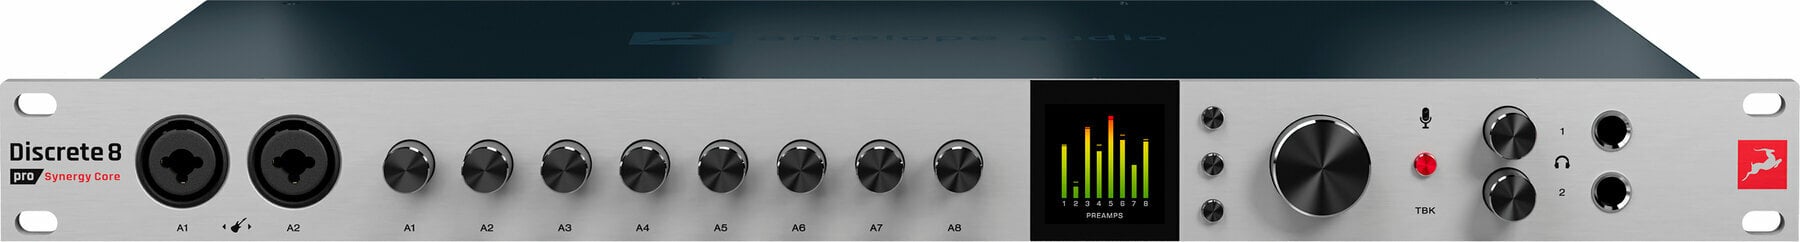 Thunderbolt Audio Interface Antelope Audio Discrete 8 Pro Synergy Core